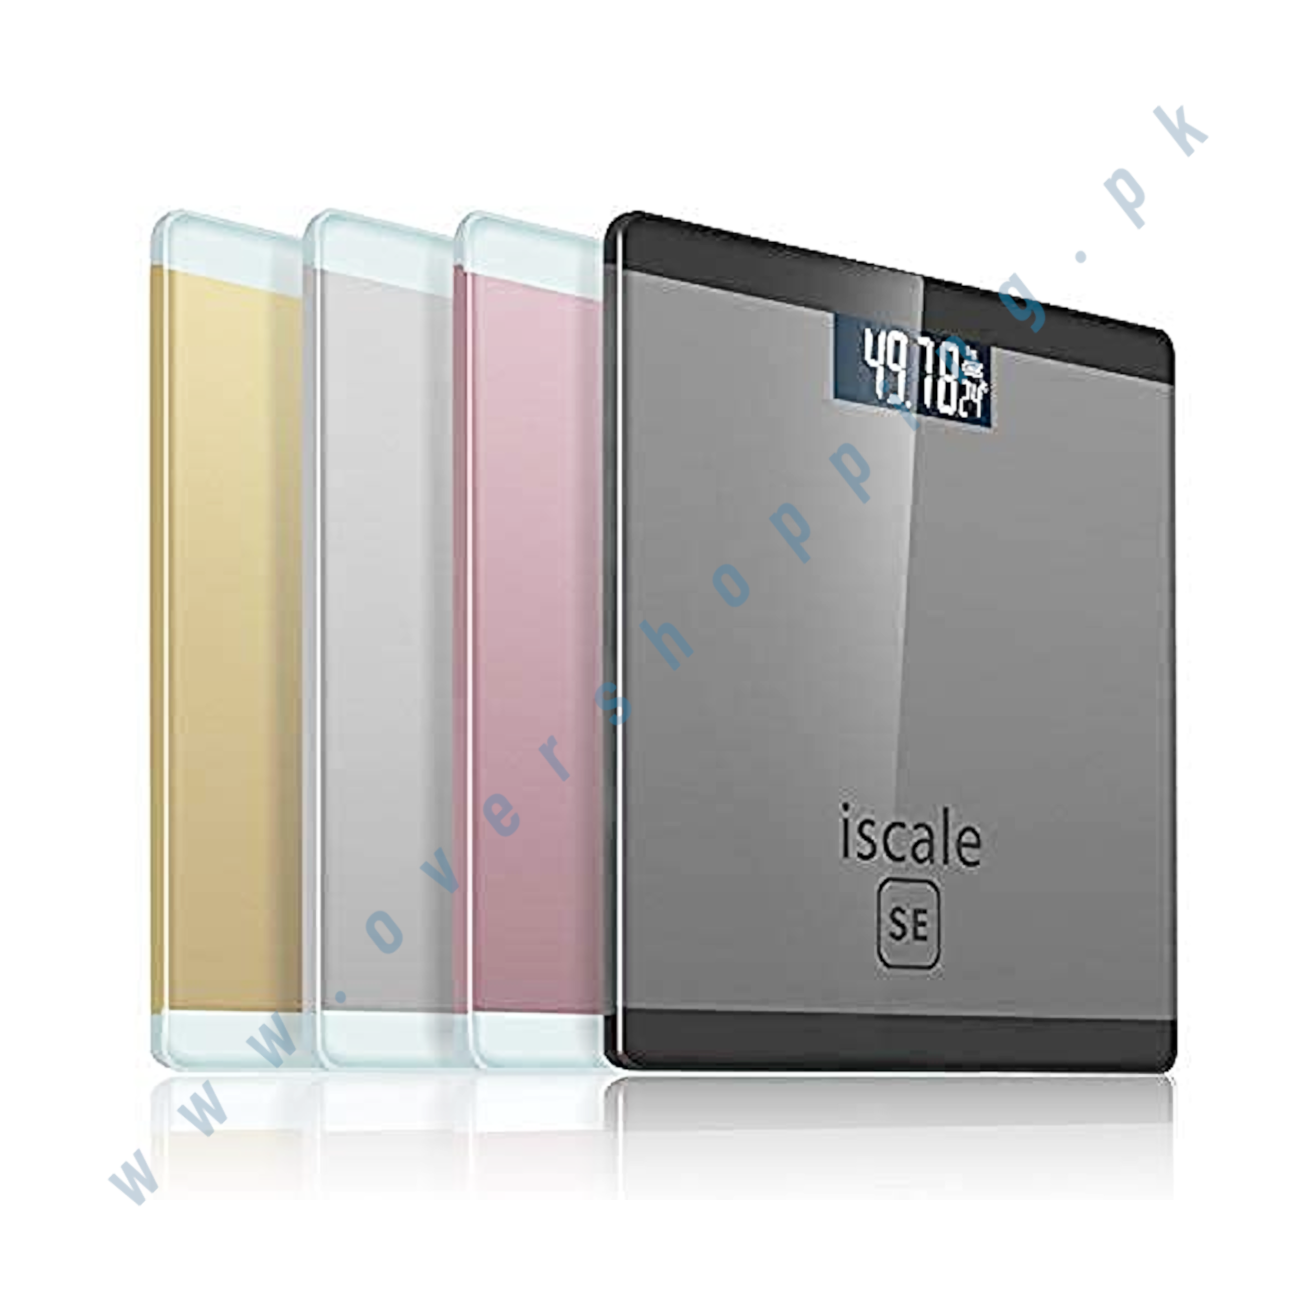 Escali Digital Glass Bath Scale for Body Weight - Accurate Bathro